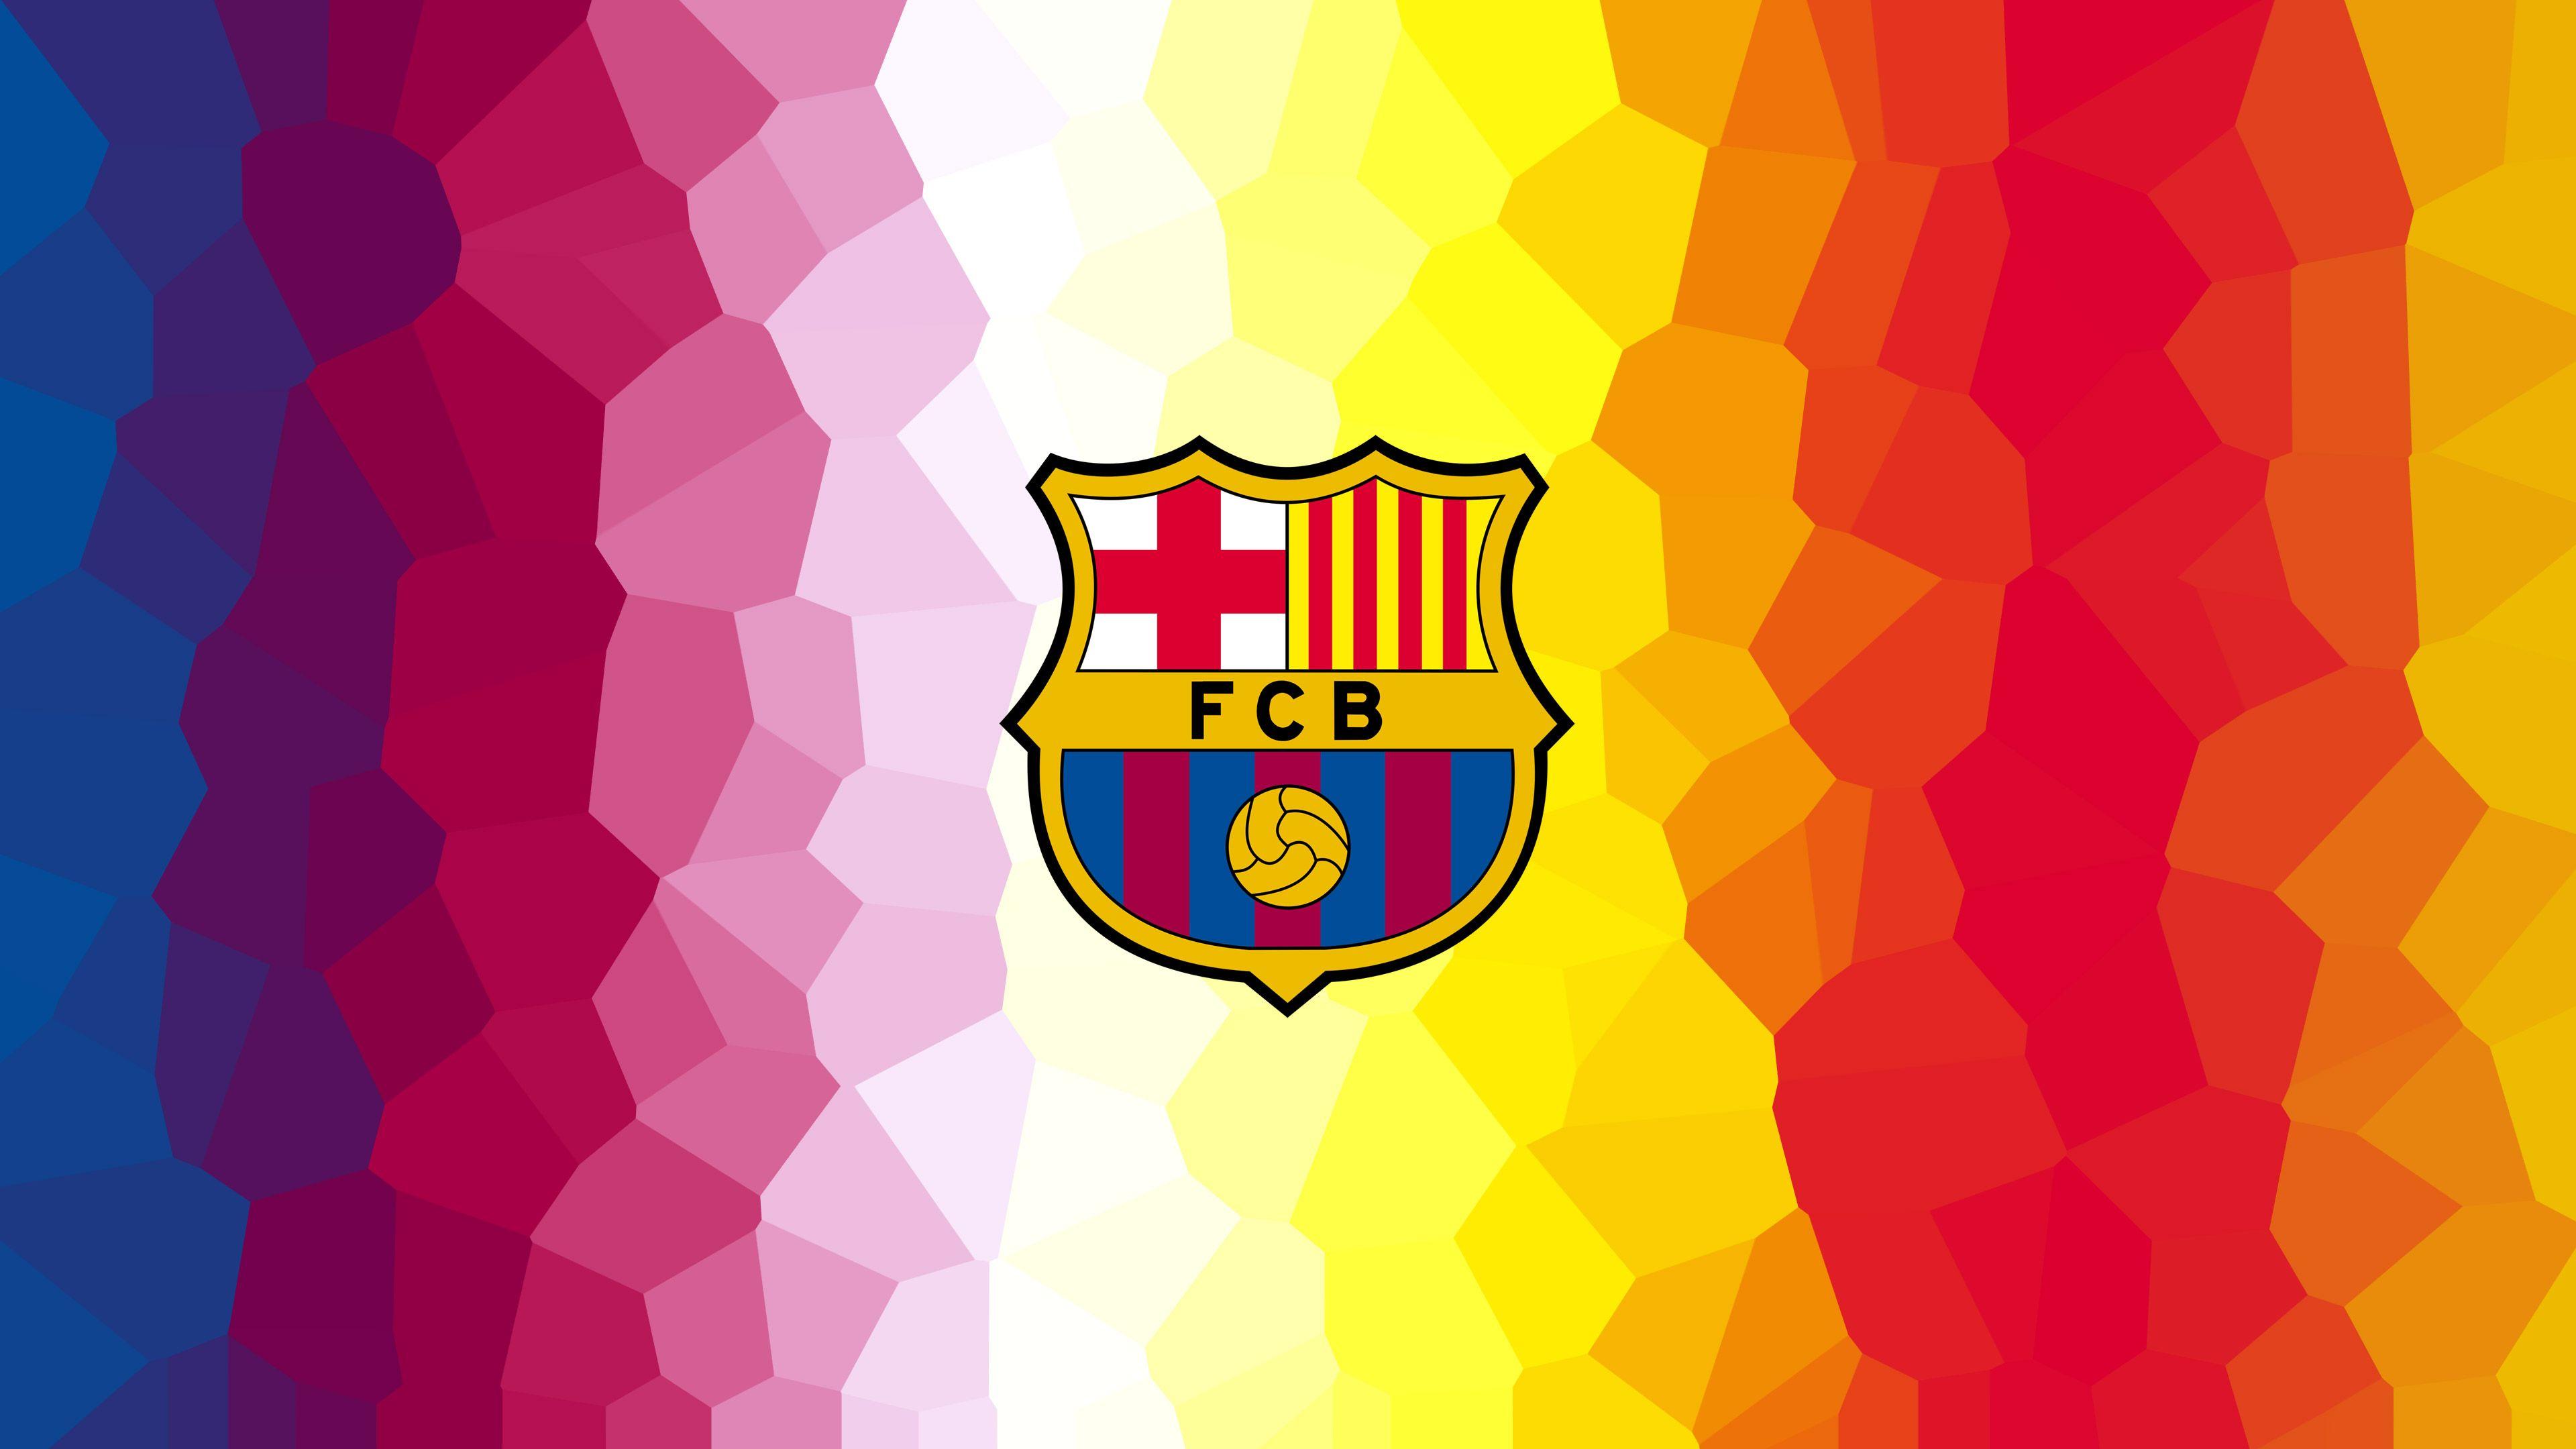 FCB Logo Minimalism, HD Sports, 4k Wallpaper, Image, Background